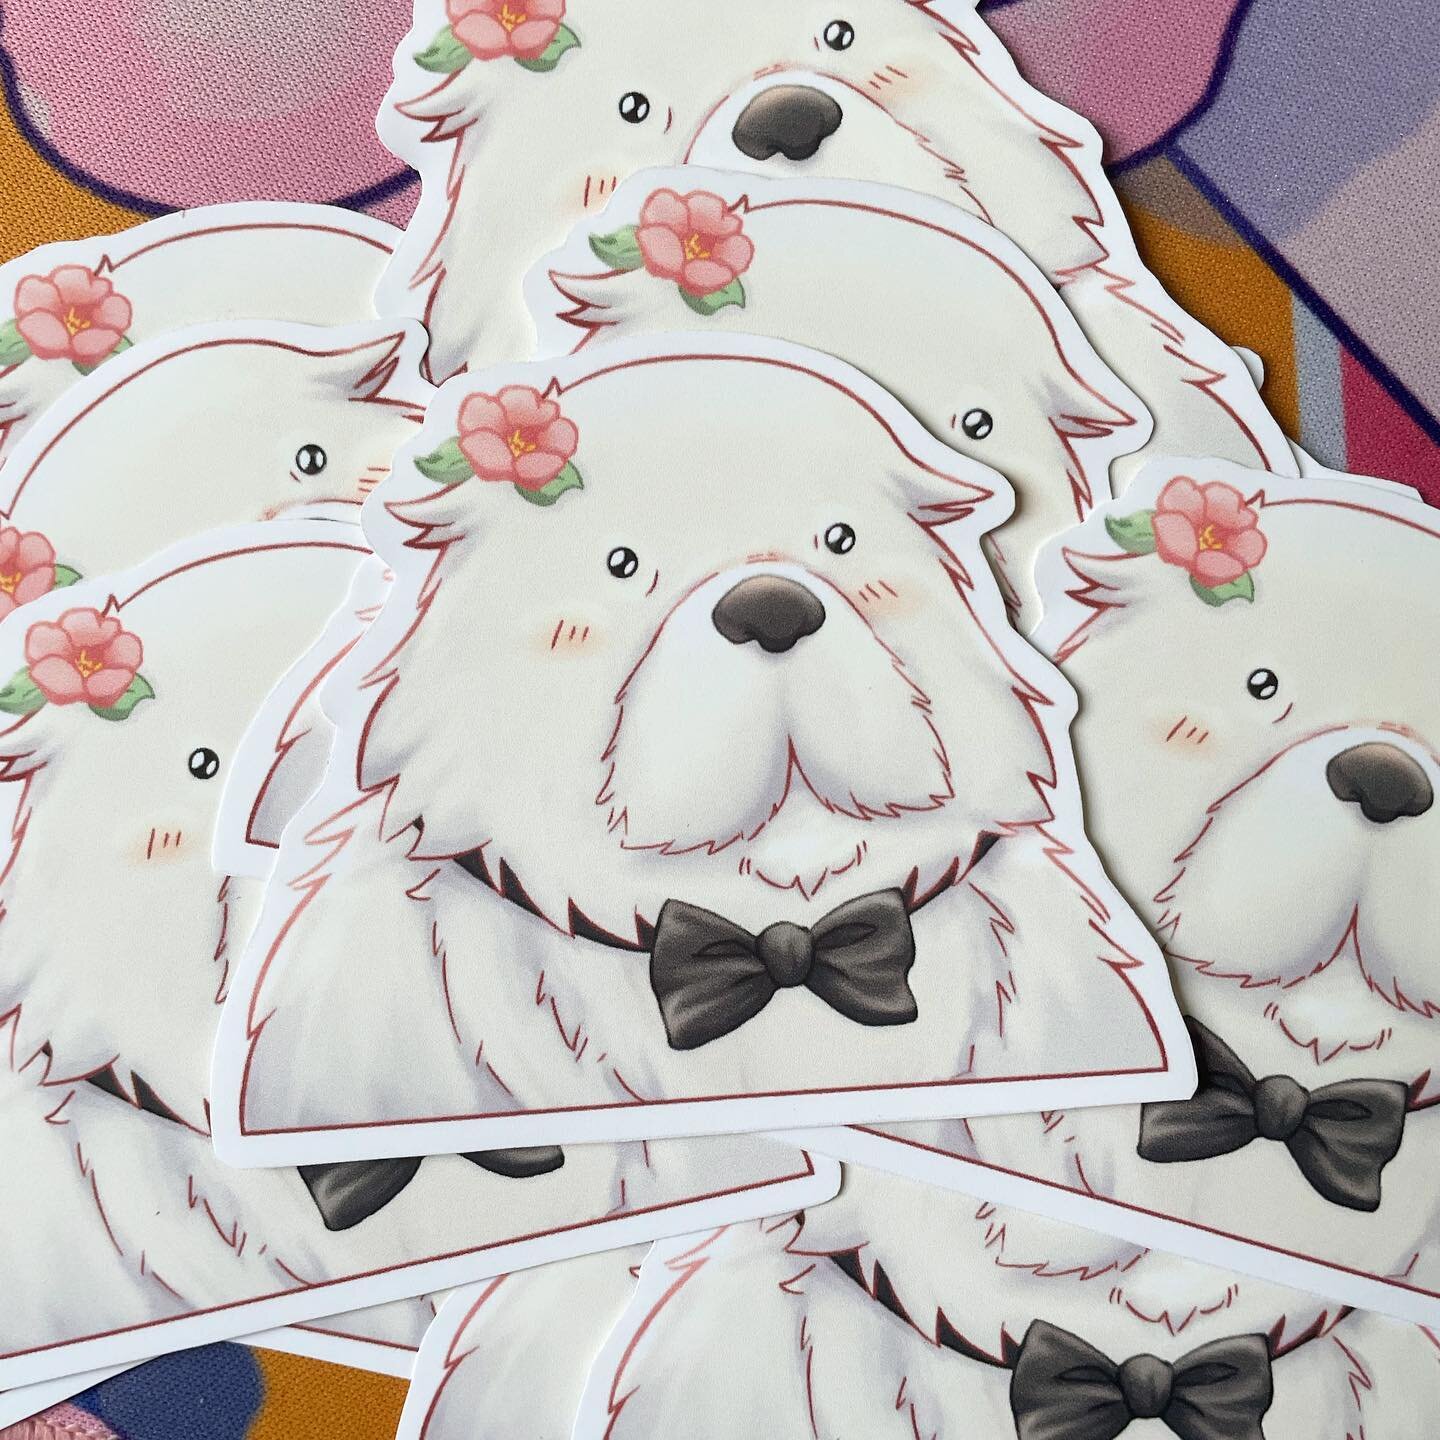 ✨Bond Sticker 🐶 Boof Boof ✨
-
-
-
-
#sticker #spyxfamily #bondforger #bond #anime #dog #cutesticker #smallbusiness